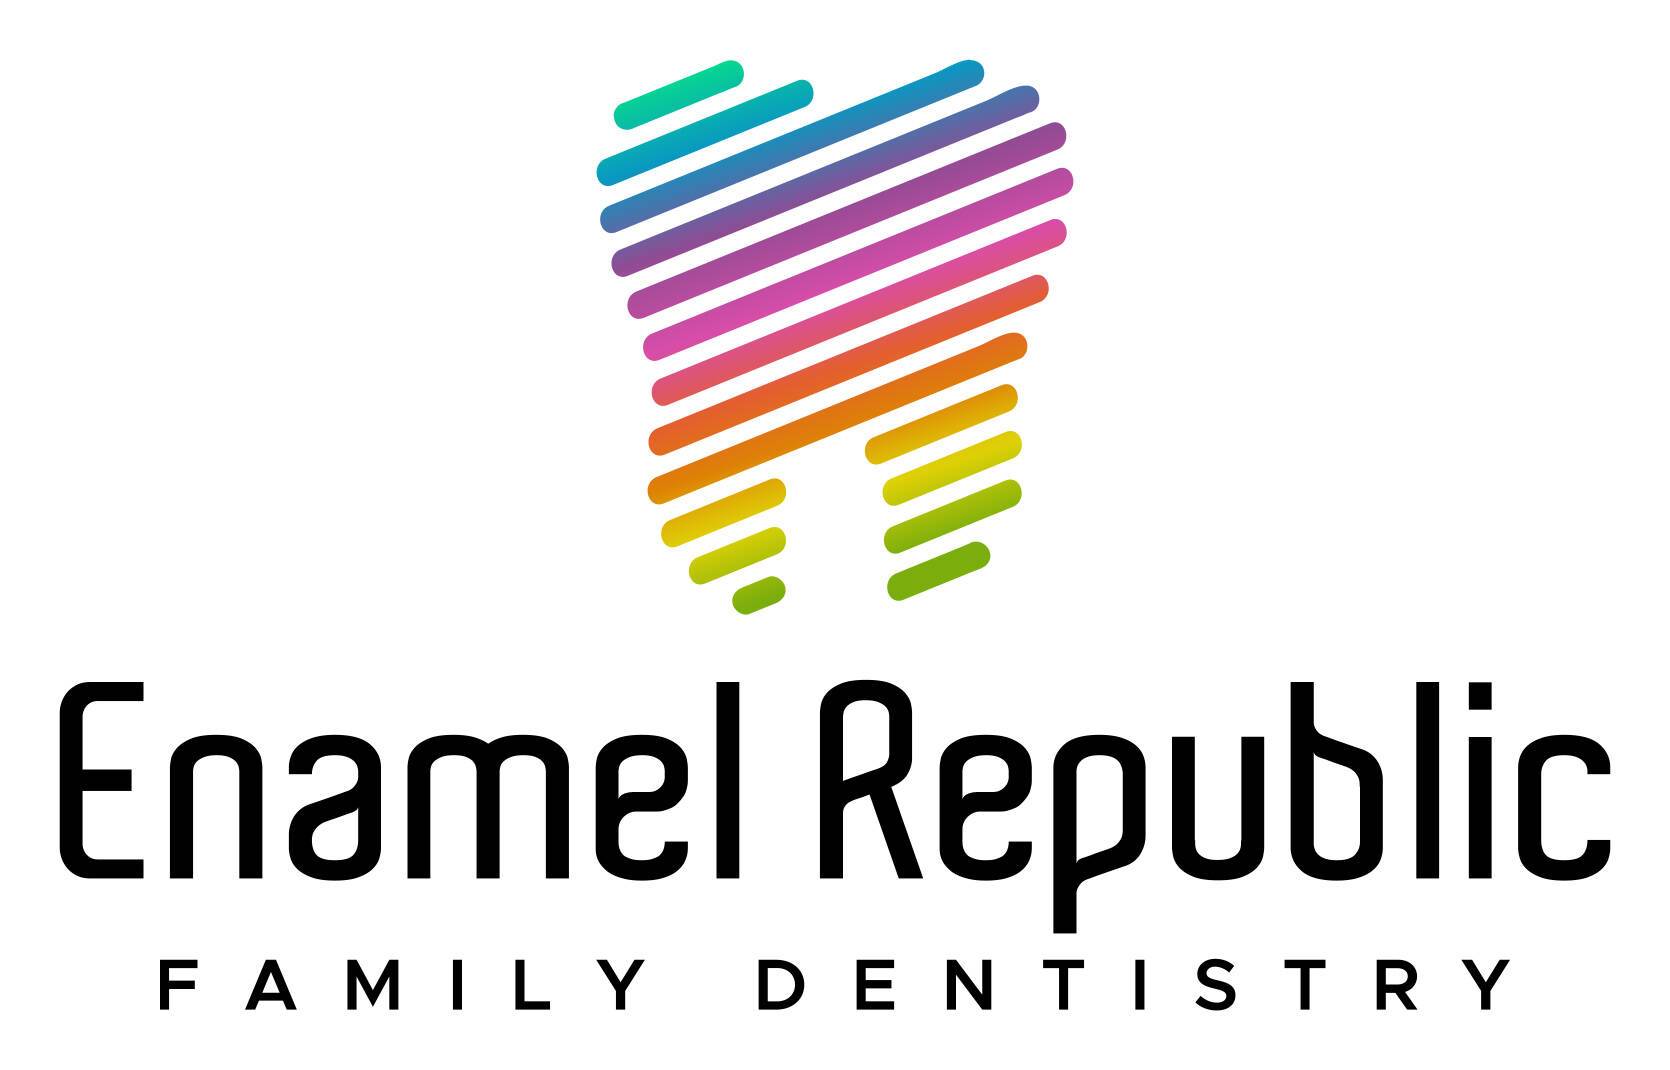 ENAMEL REPUBLIC FAMILY DENTISTRY